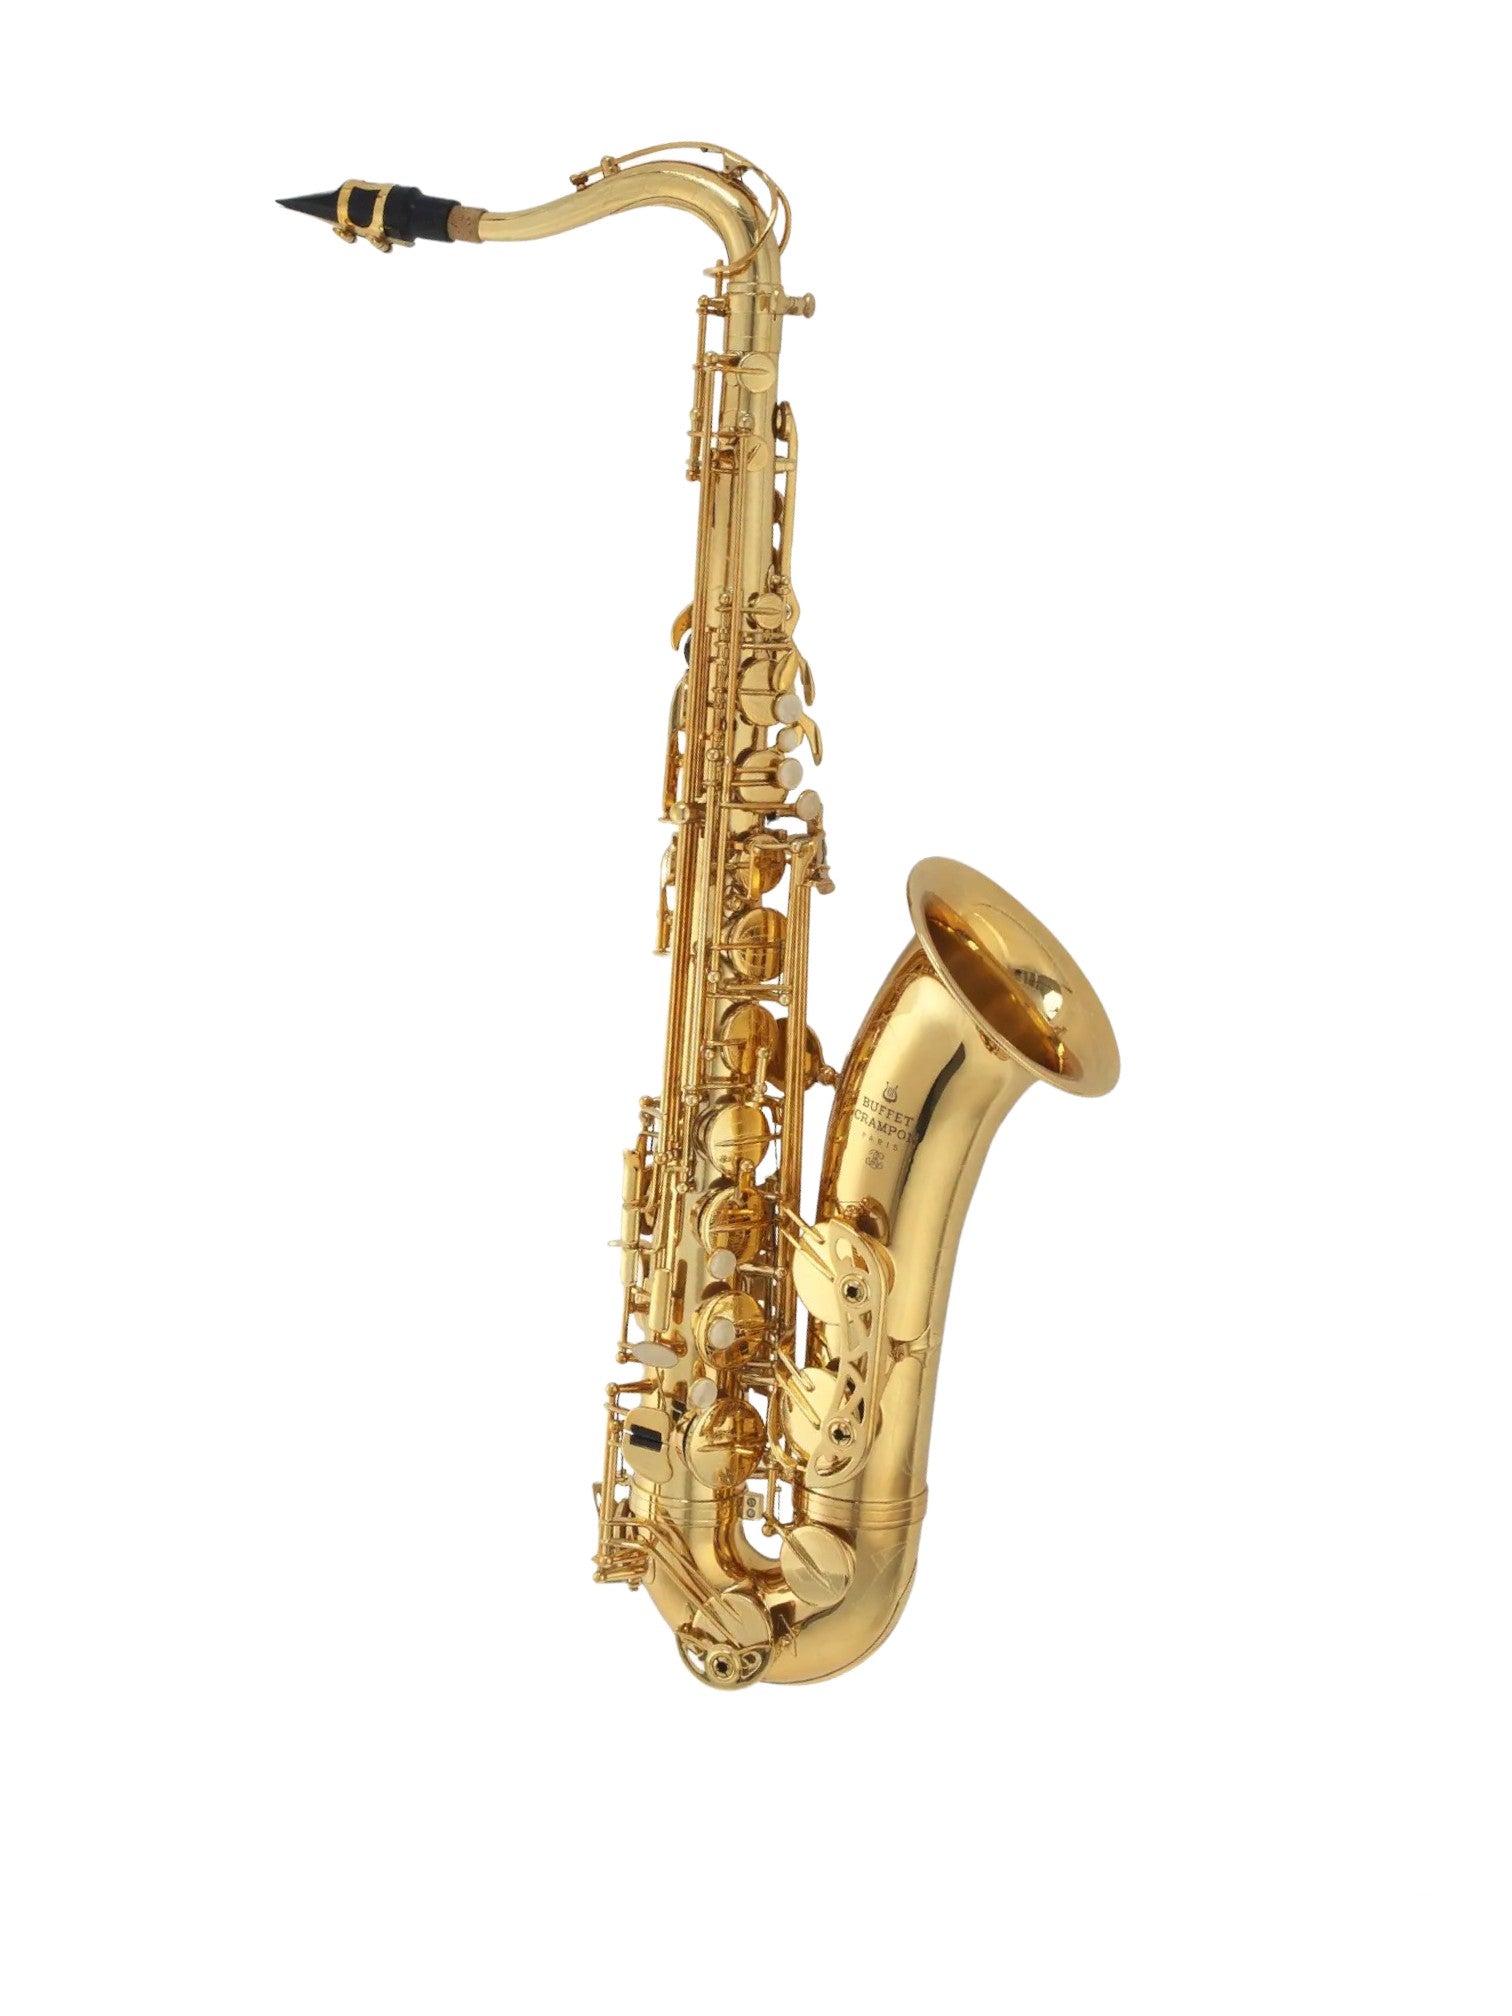 Buffet Crampon 400 Series Tenor Saxophone - Lacquer Finish